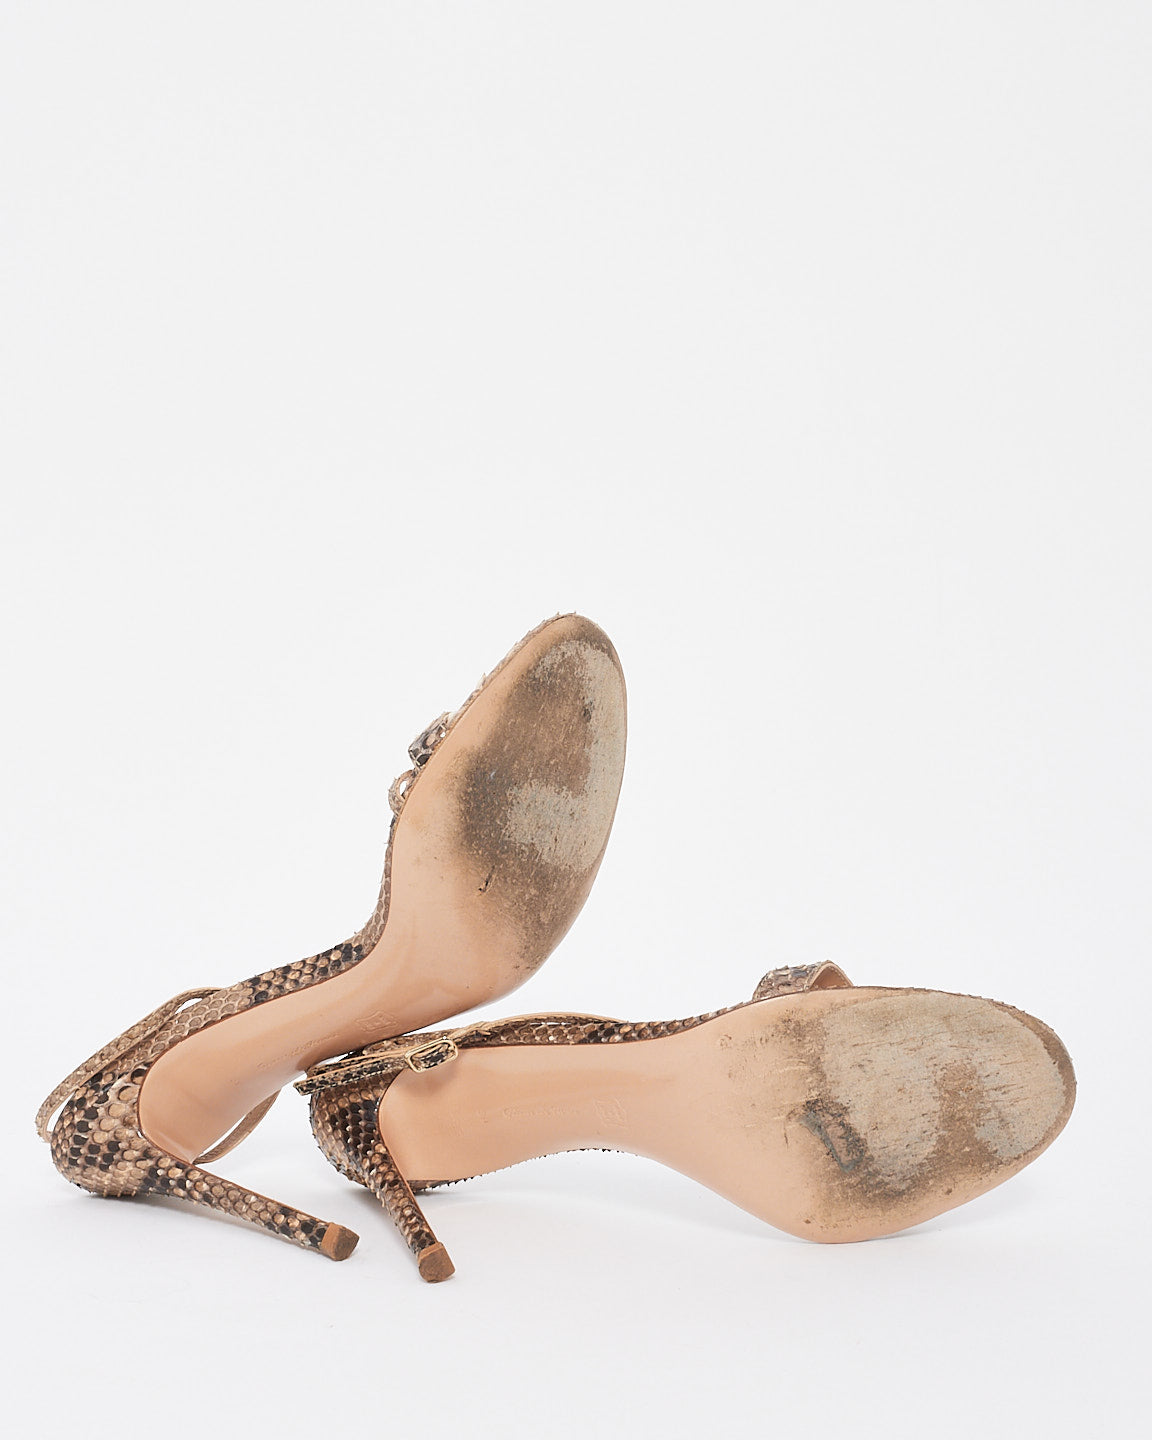 Sandales Manhattan exotiques en cuir python marron Gianvito Rossi - 39